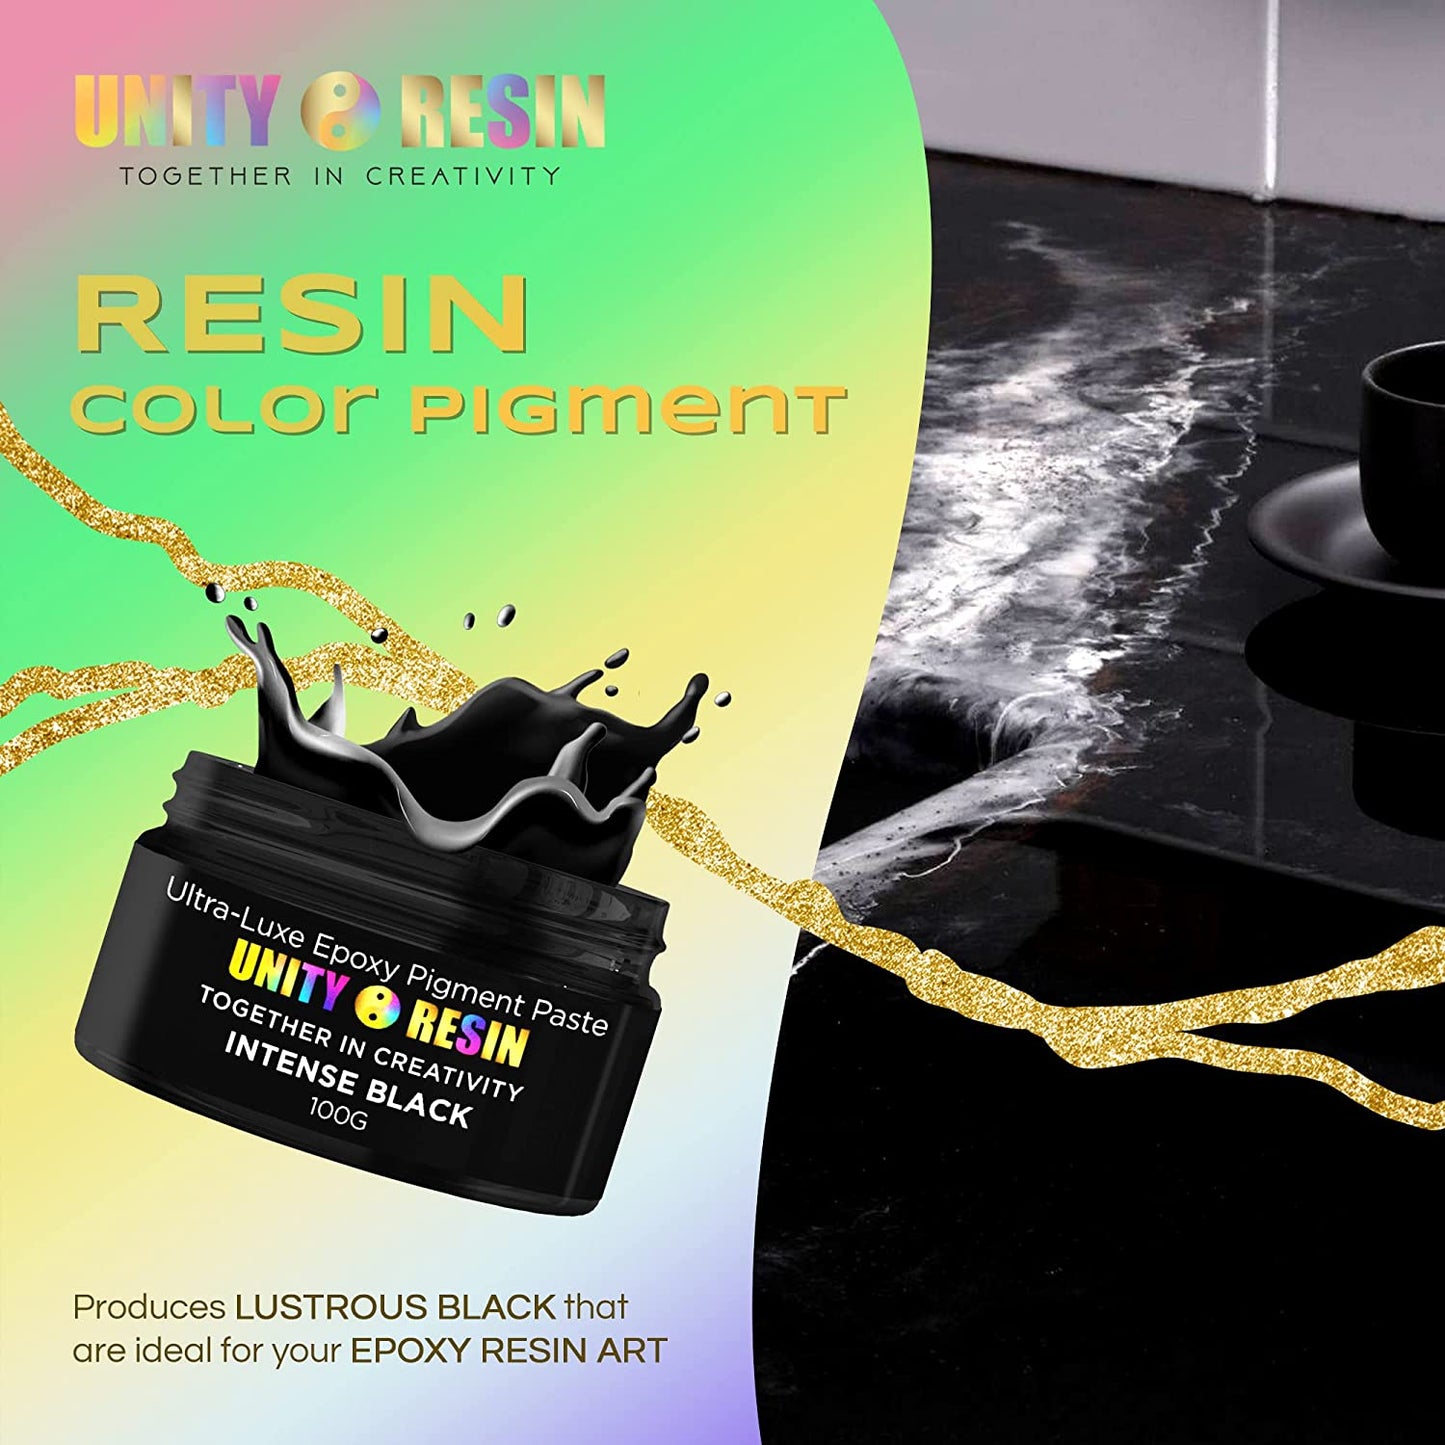 black resin pigment, resin paste, epoxy resin, resin art, resin color, black mica for resin, black color for resin, resin supplies, resin art supplies, epoxy pigment paste, resin paint, resin dye, resin color, black resin paint